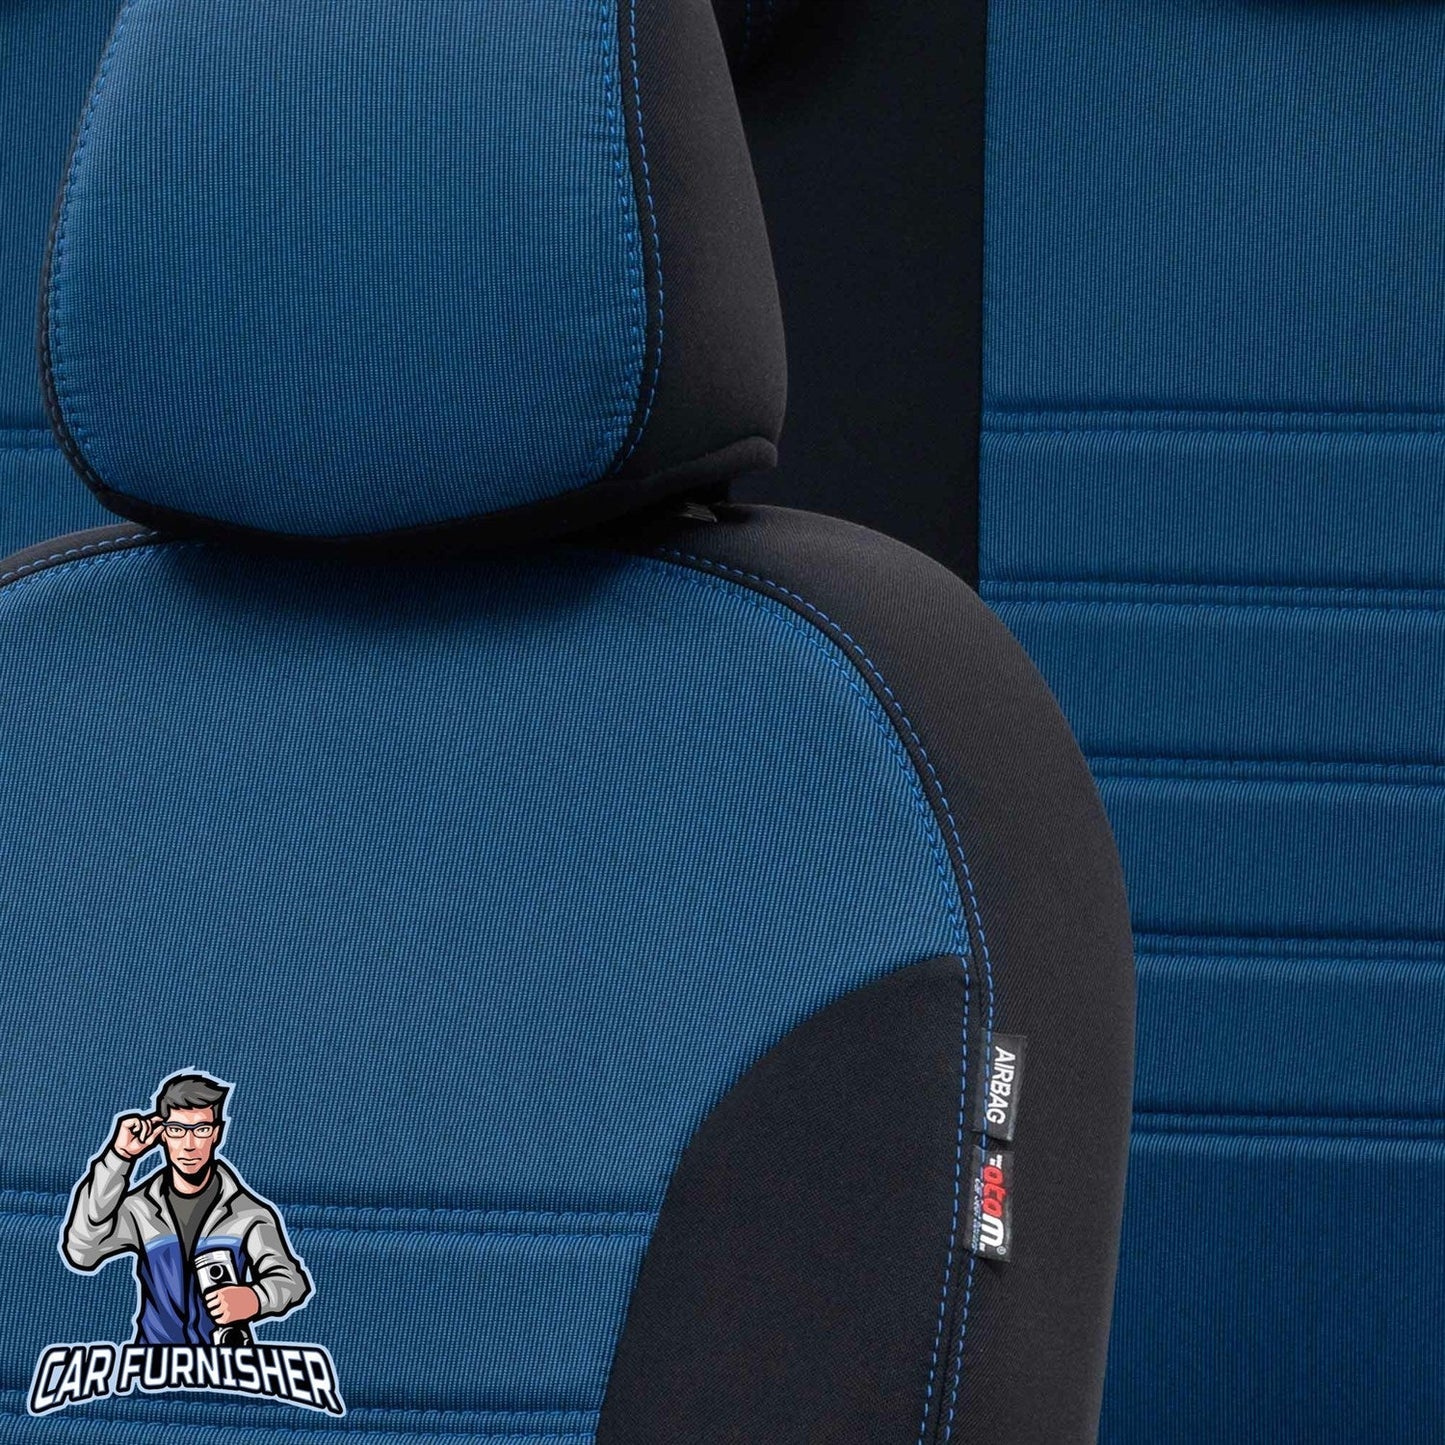 Skoda Kodiaq Seat Covers Original Jacquard Design Blue Jacquard Fabric